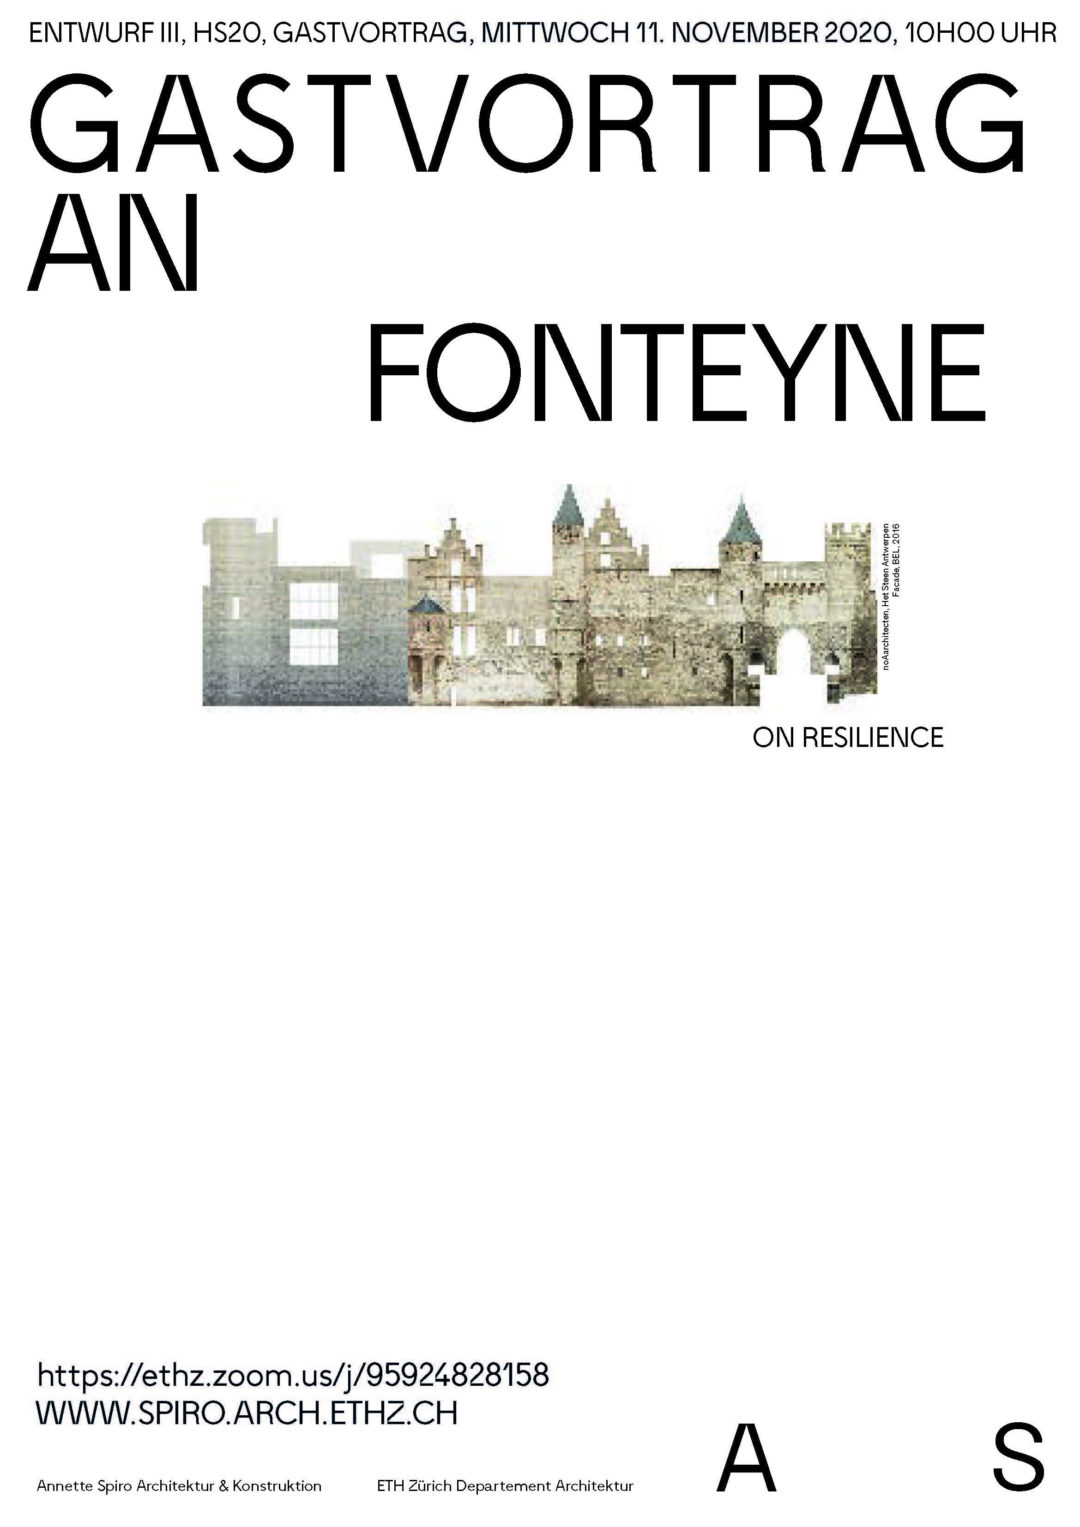 An Fonteyne. Gastvortrag, Mittwoch 11. November 2020